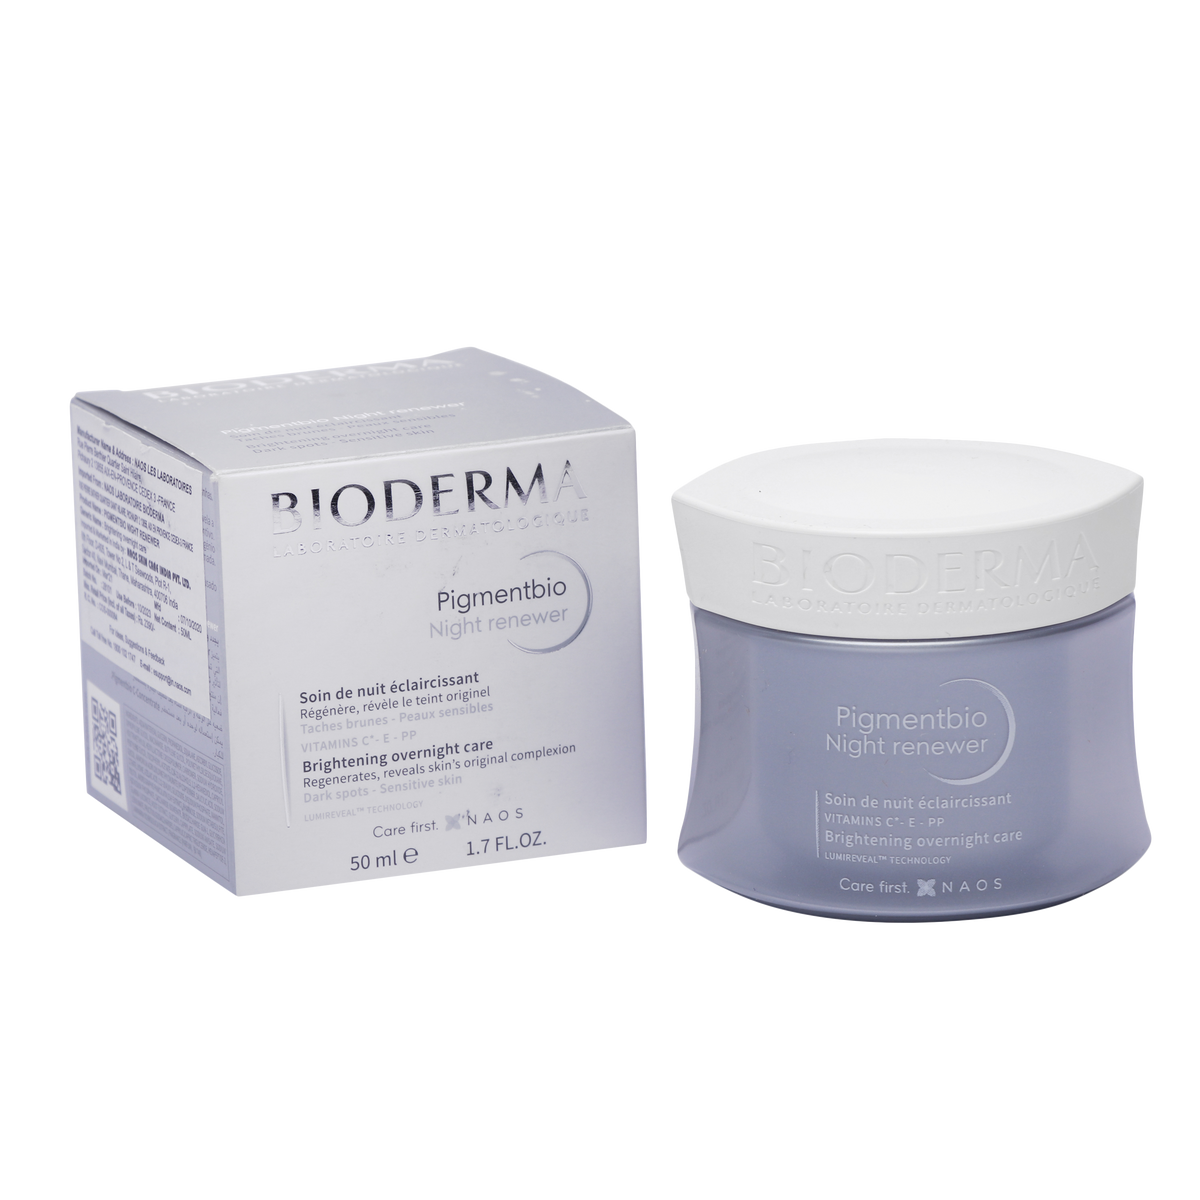 BIODERMA Pigmentbio Daily Care SPF 50+ Lightening Cream for sale online